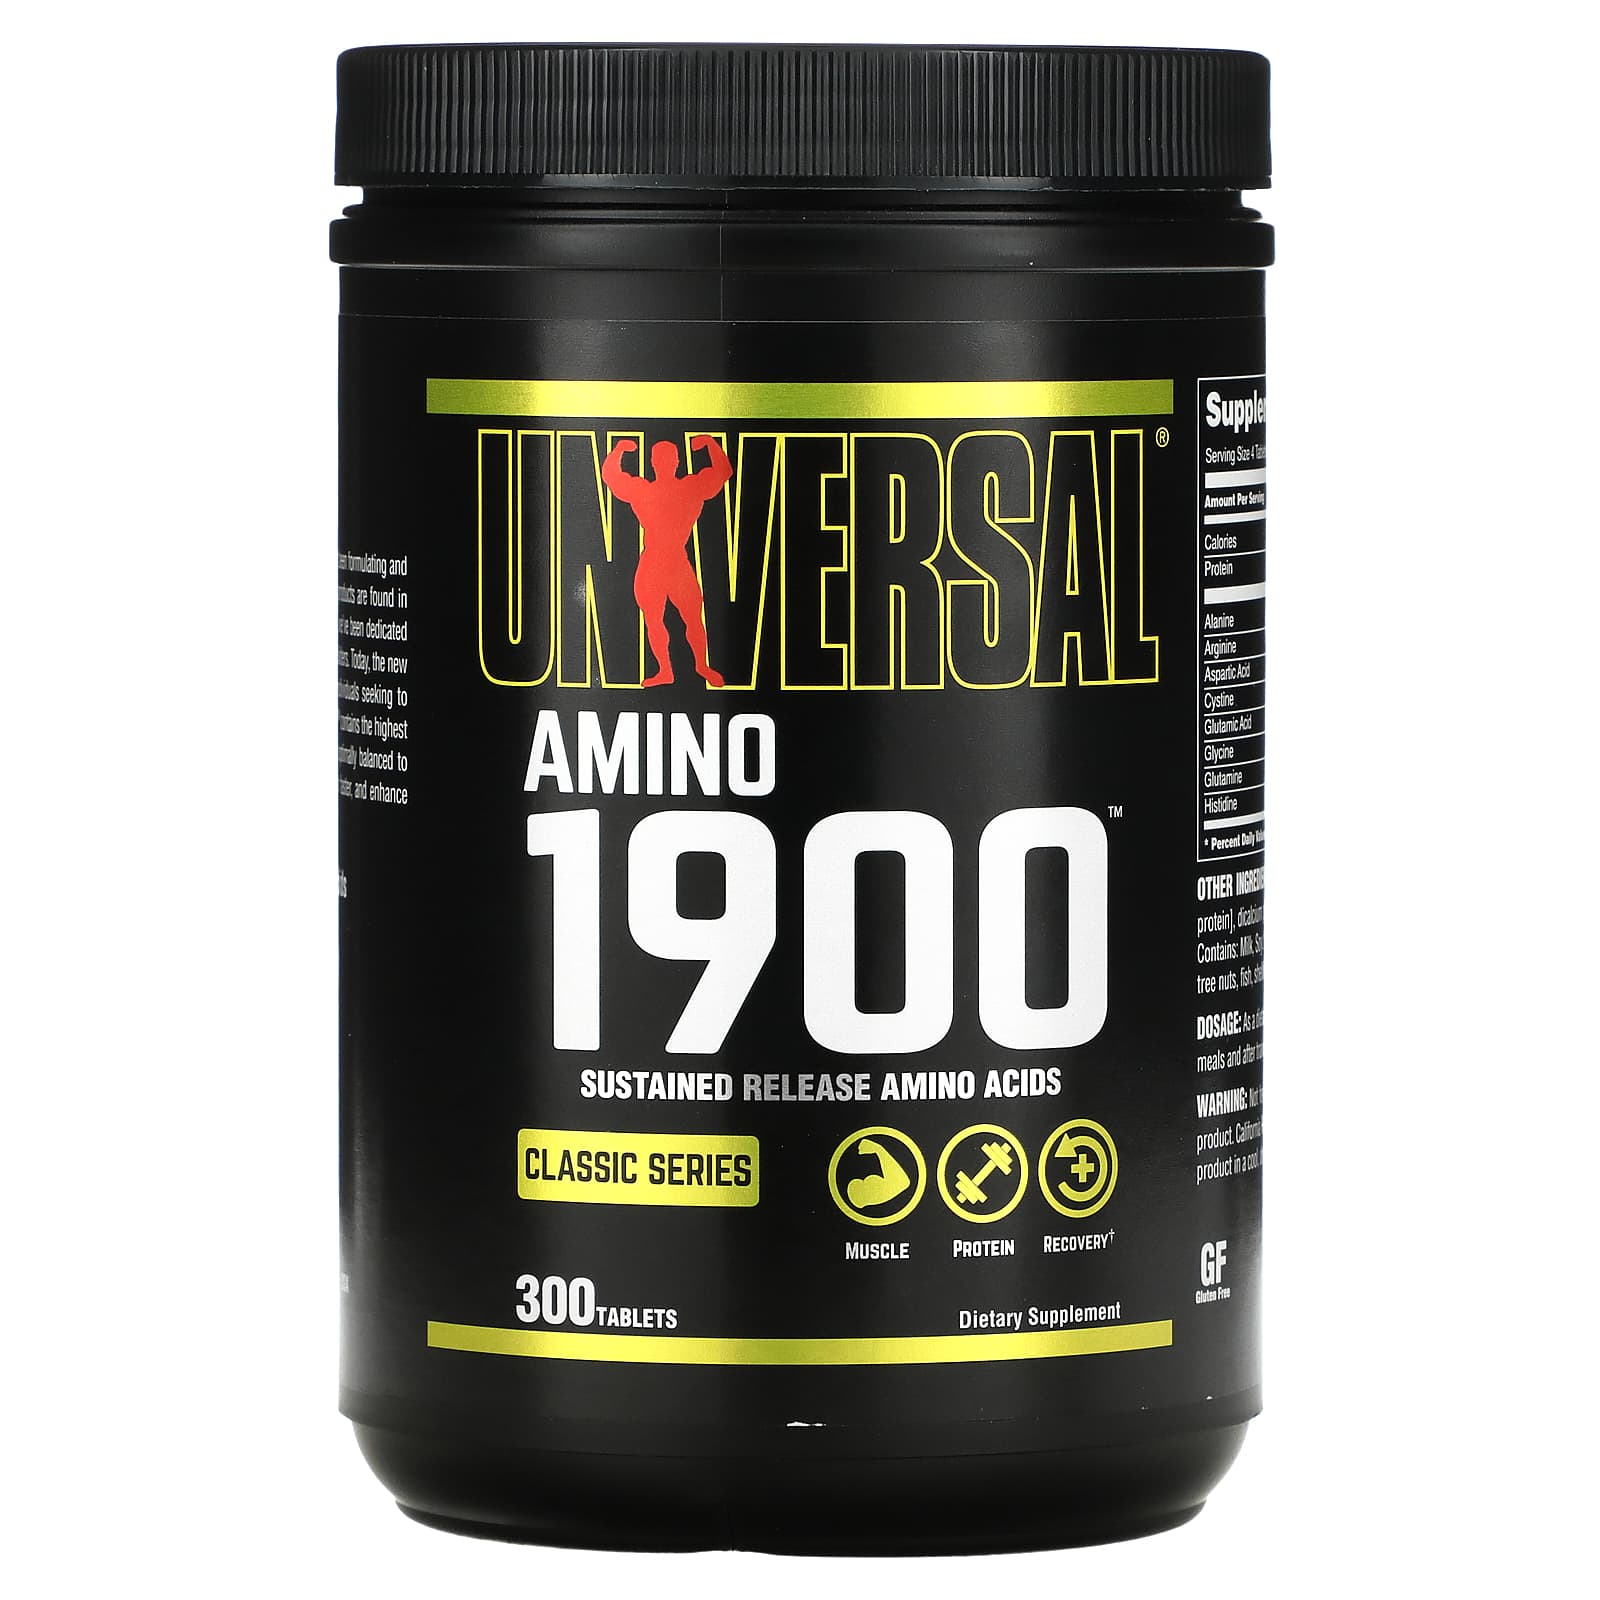 Аминокислоты nutrition. Amino 1900 Universal Nutrition. Amino 3001. Universal аминокислоты 1900. Юниверсал добавки.